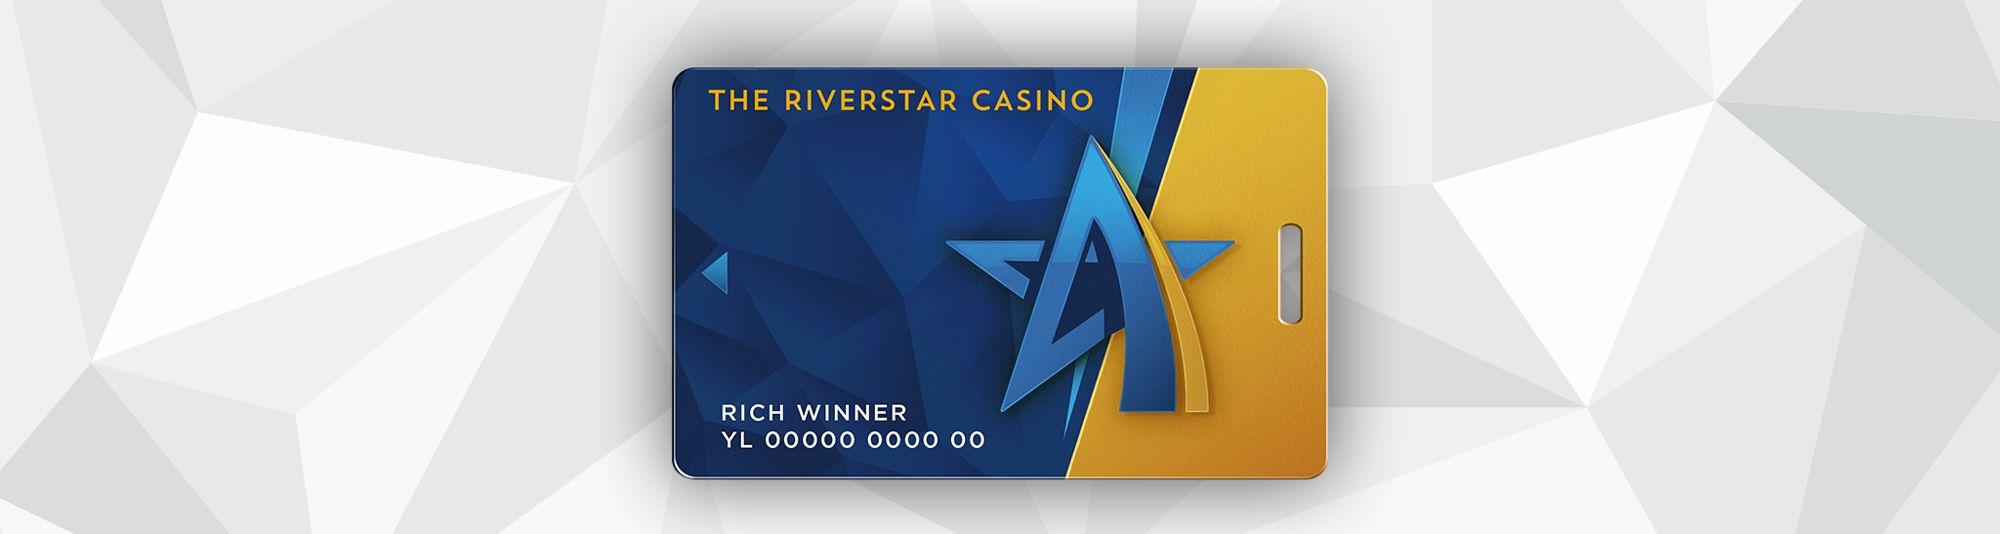 River Star Logo - Players Club. The Riverstar Casino